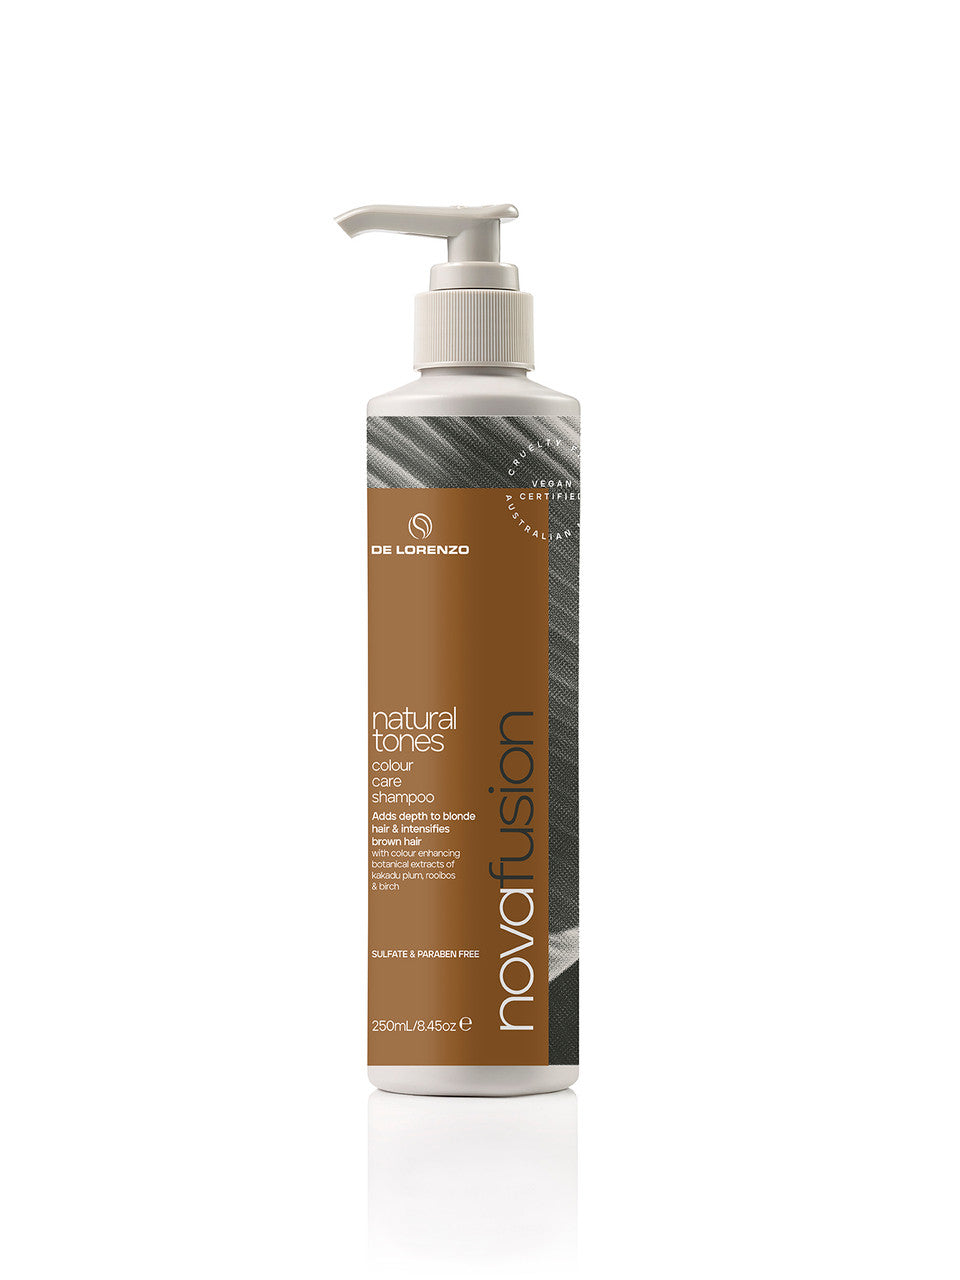 De Lorenzo Natural Tones Colour Care Shampoo 250ml